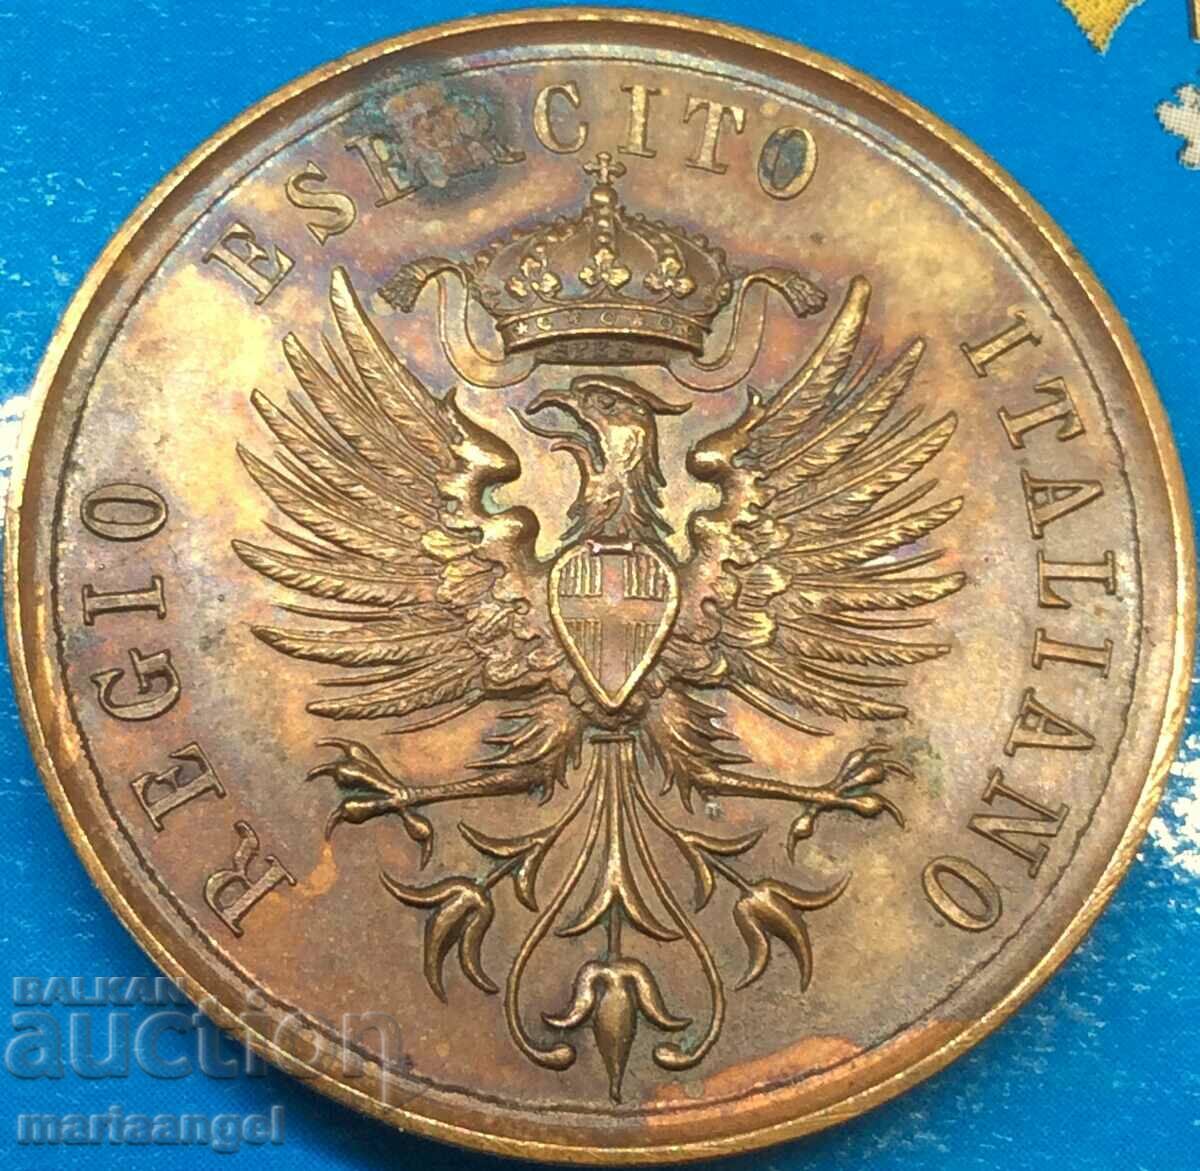 Royal Italian Army medal 30mm 12.76g copper